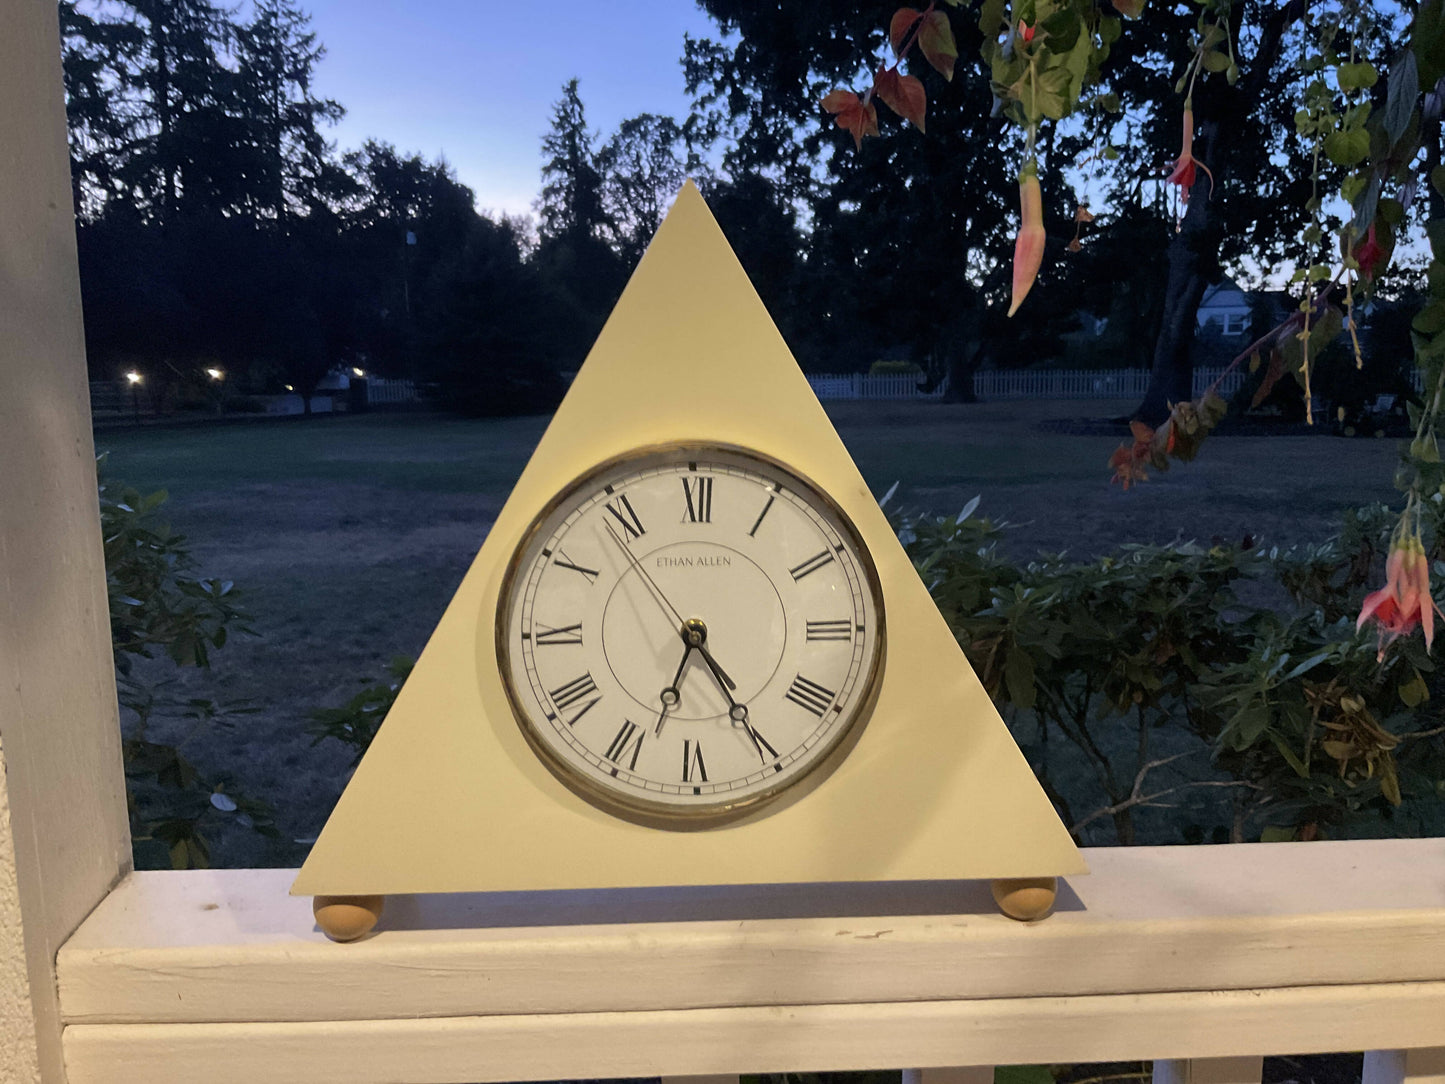 Ethan Allen Triangle Clock